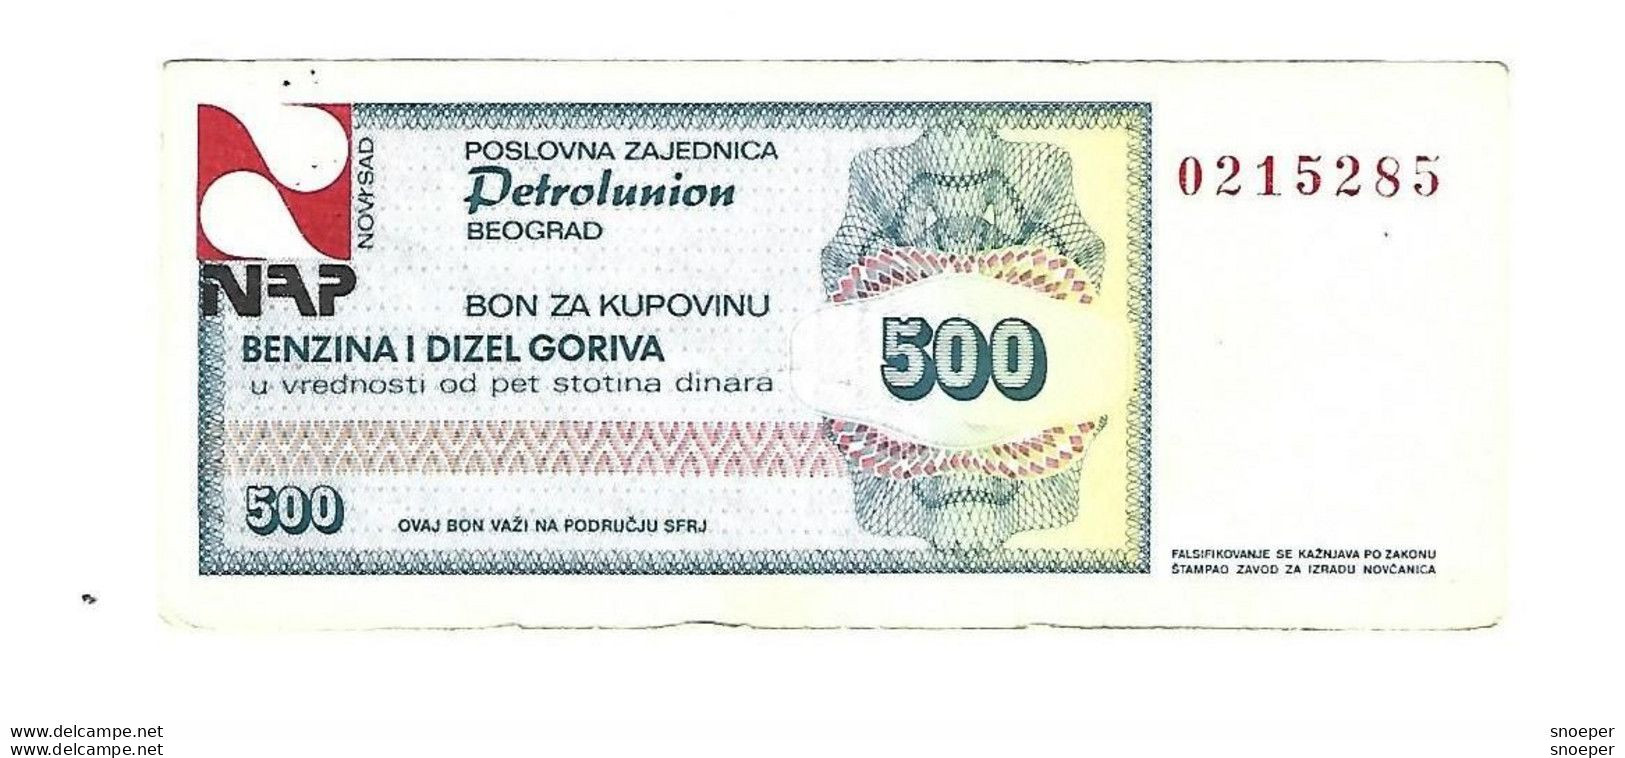 Serbia Beograd Petrolunion  Bon 500 Dinara  Benzin /diezel  S62 - Serbien